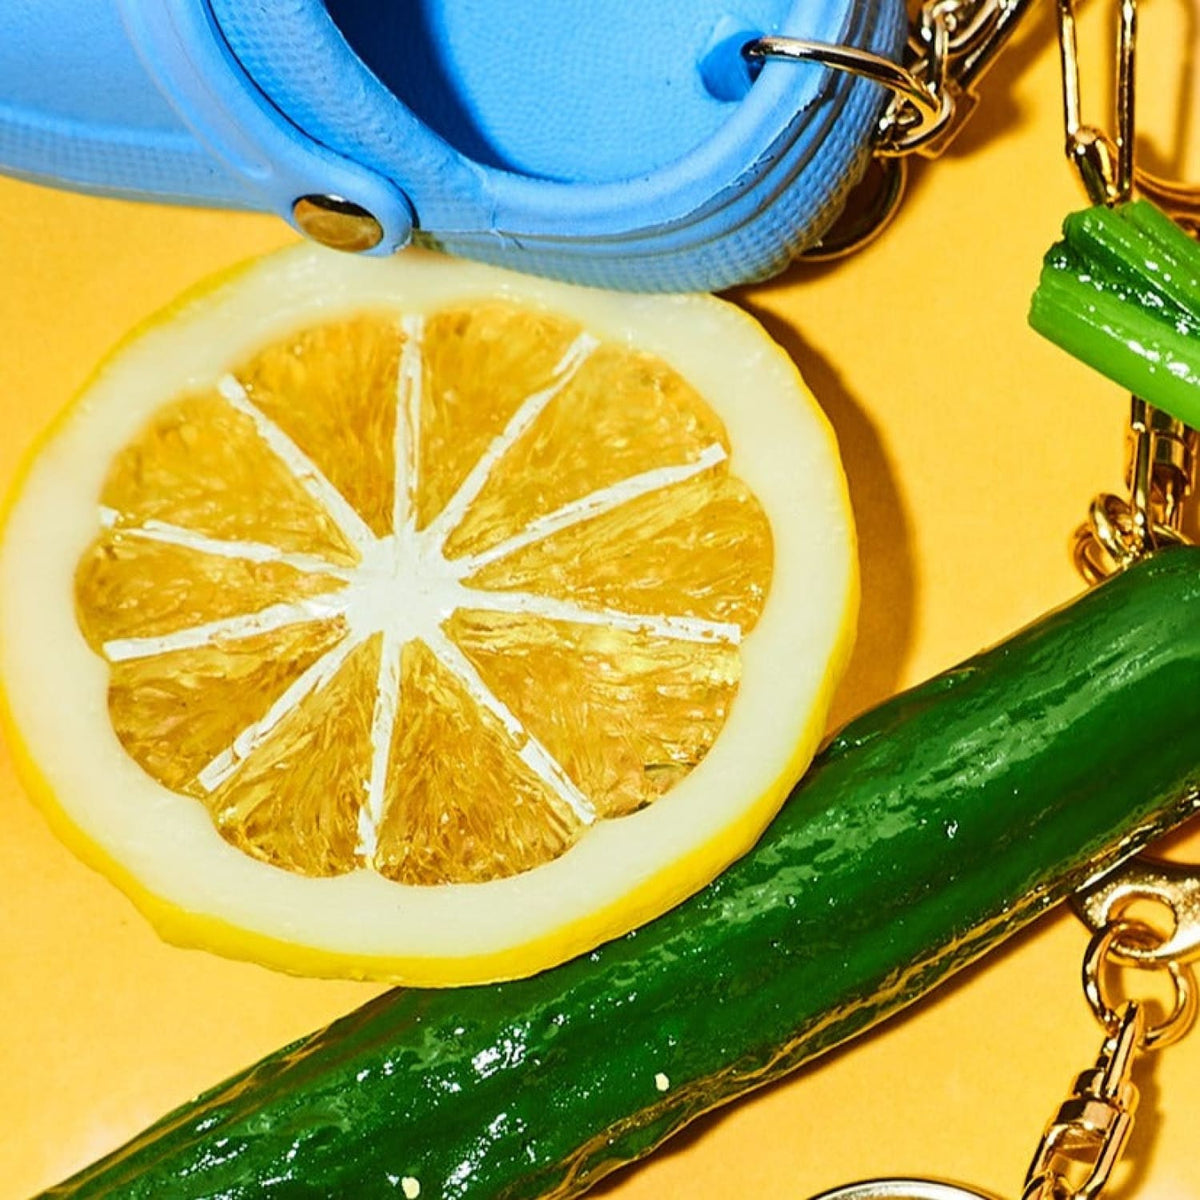 Food Keychain - Lemon Slice Accessory - Food Novelty - Funny